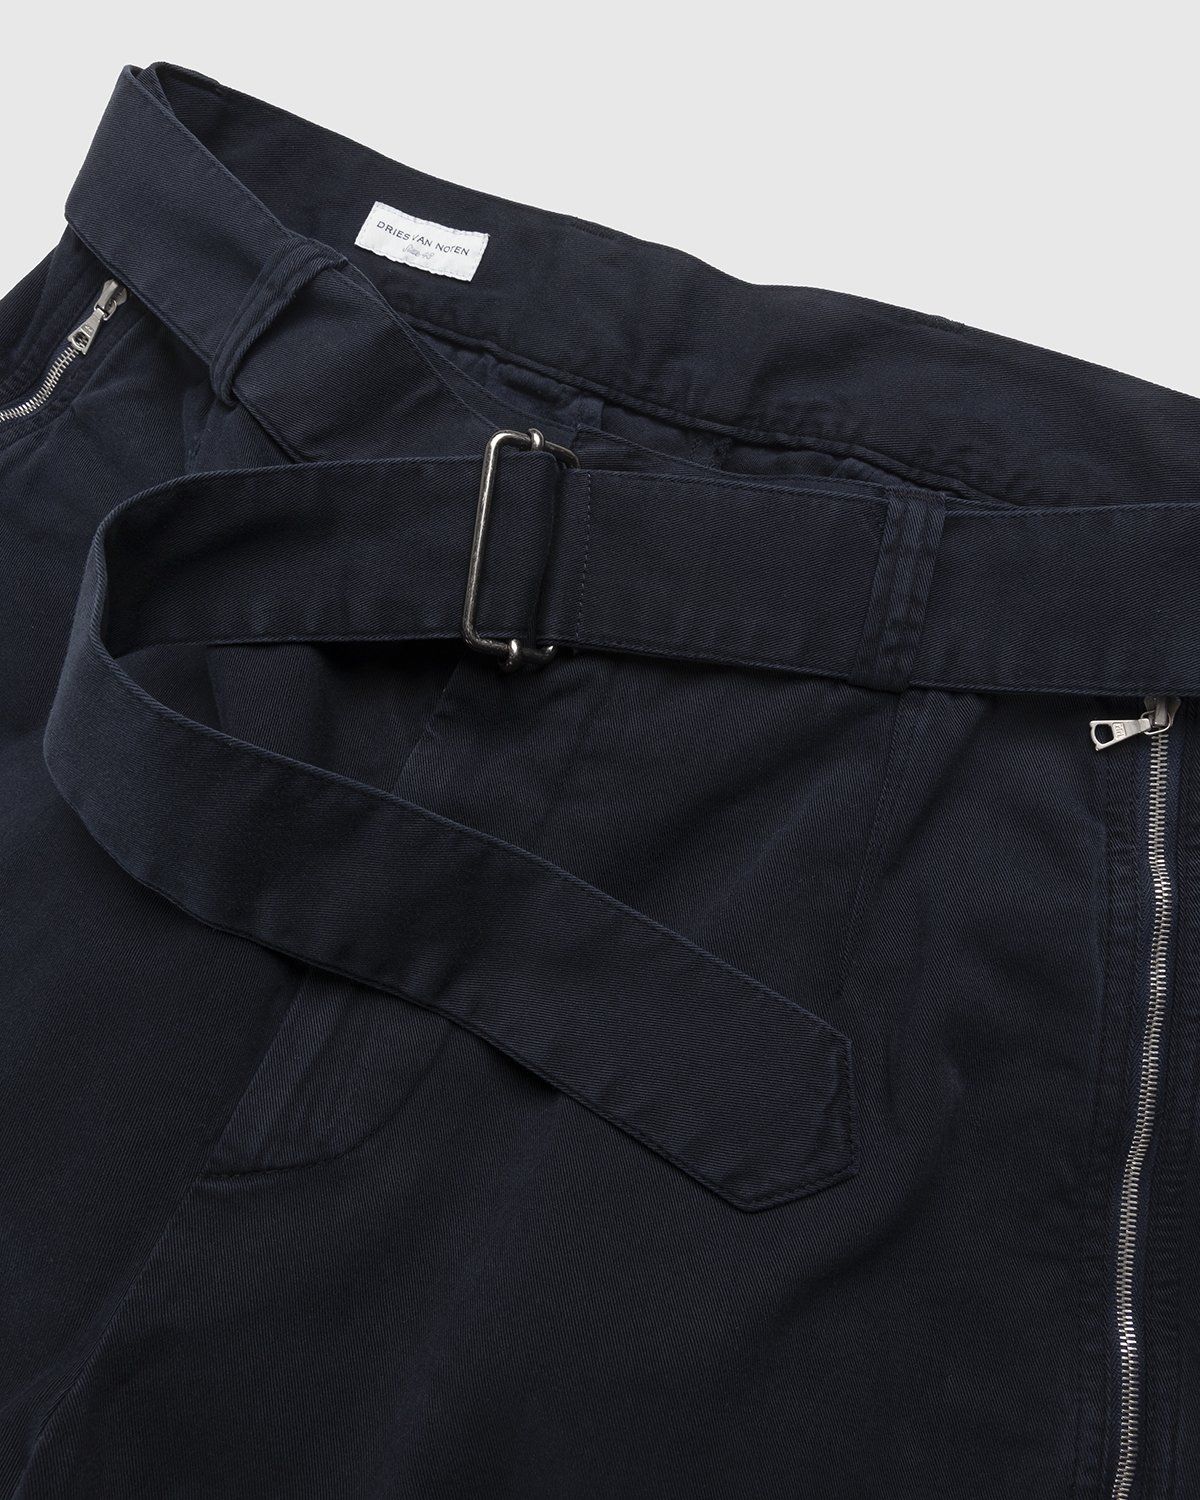 Dries van Noten – Penson Pants Navy - Pants - Blue - Image 4